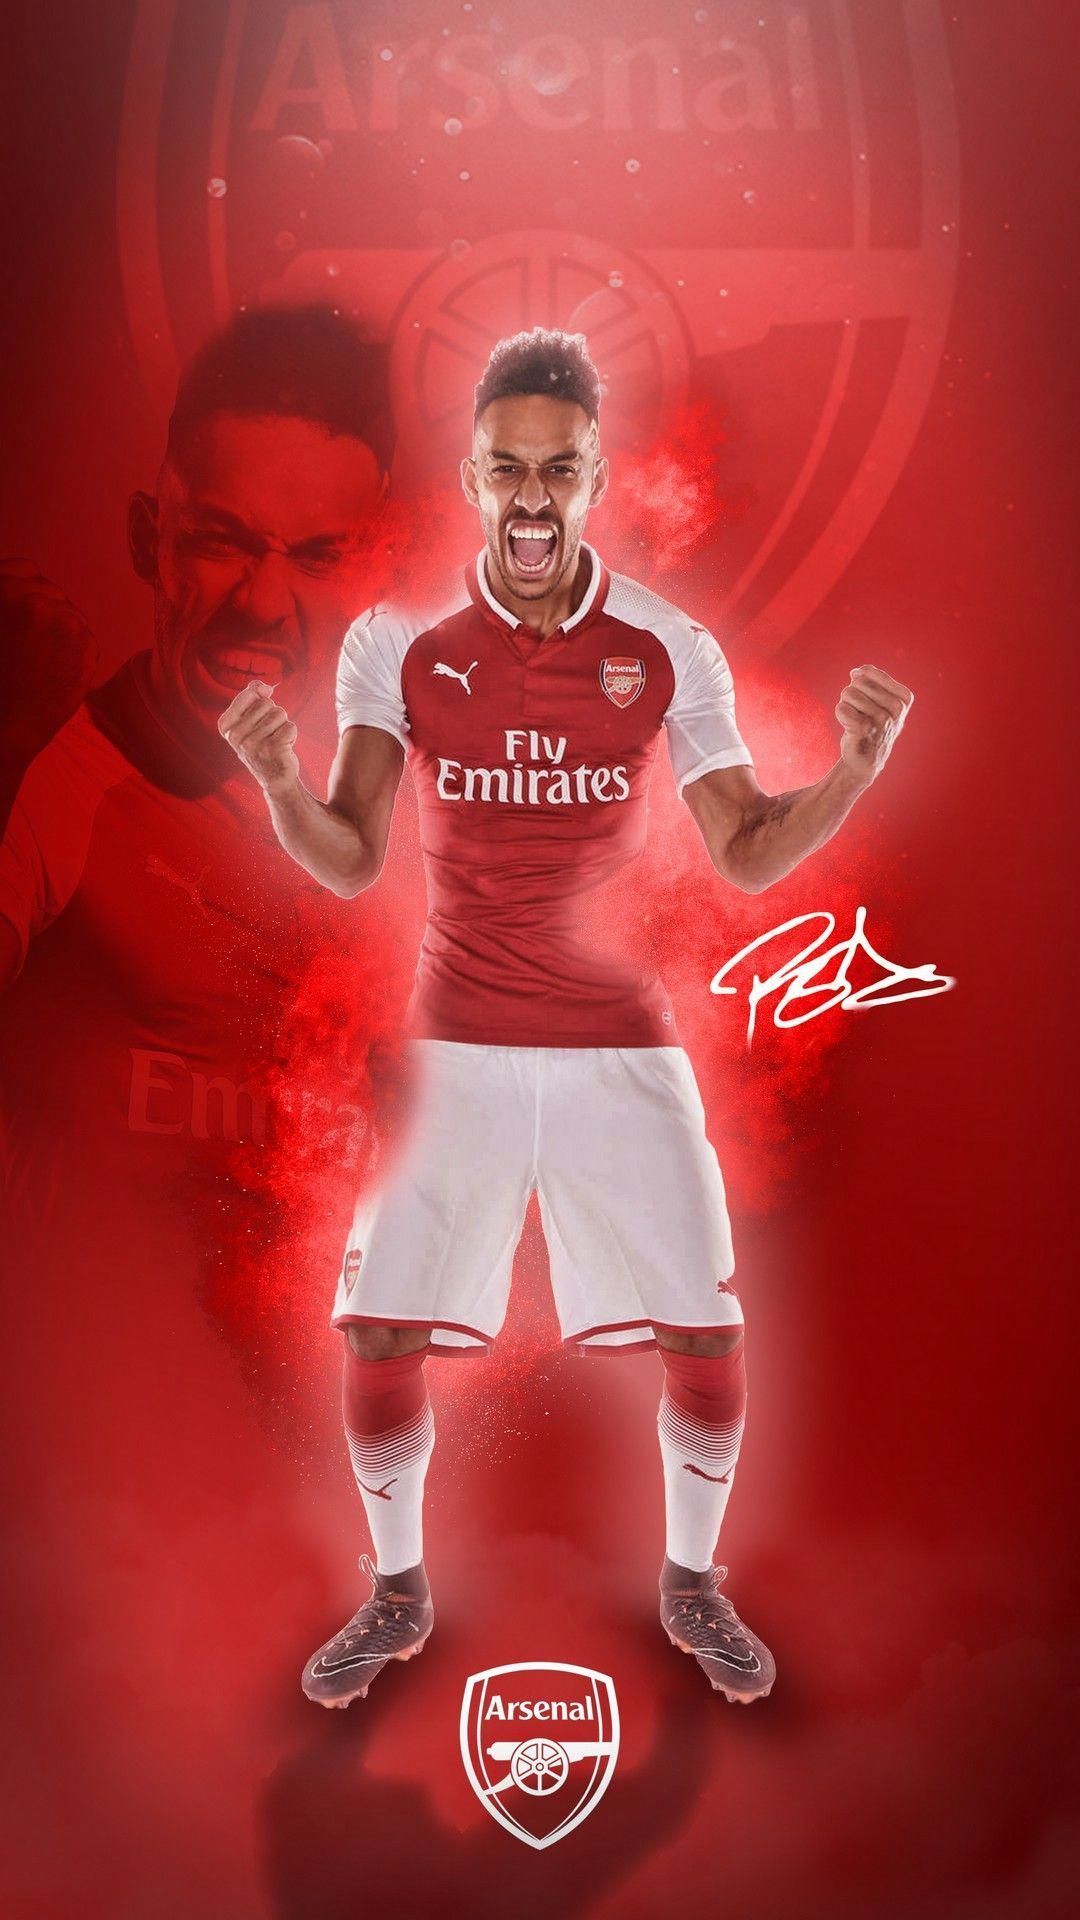 Arsenal Players Wallpaper Free Arsenal Players Background